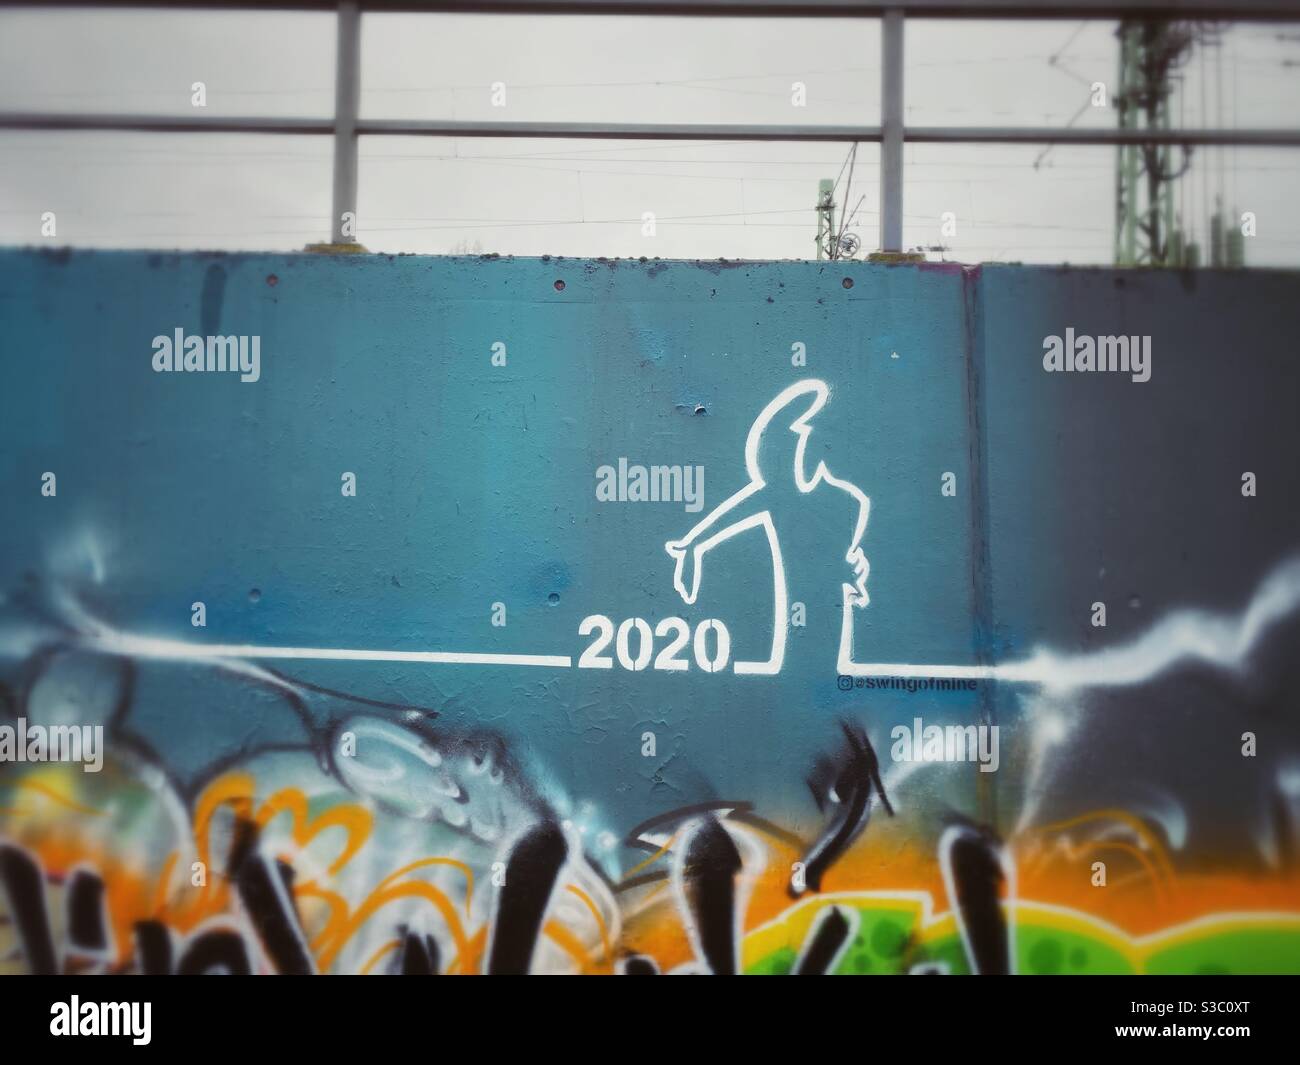 A Graffiti of the cartoon character la linea lamenting the year 2020, Berlin, Germany Stock Photo